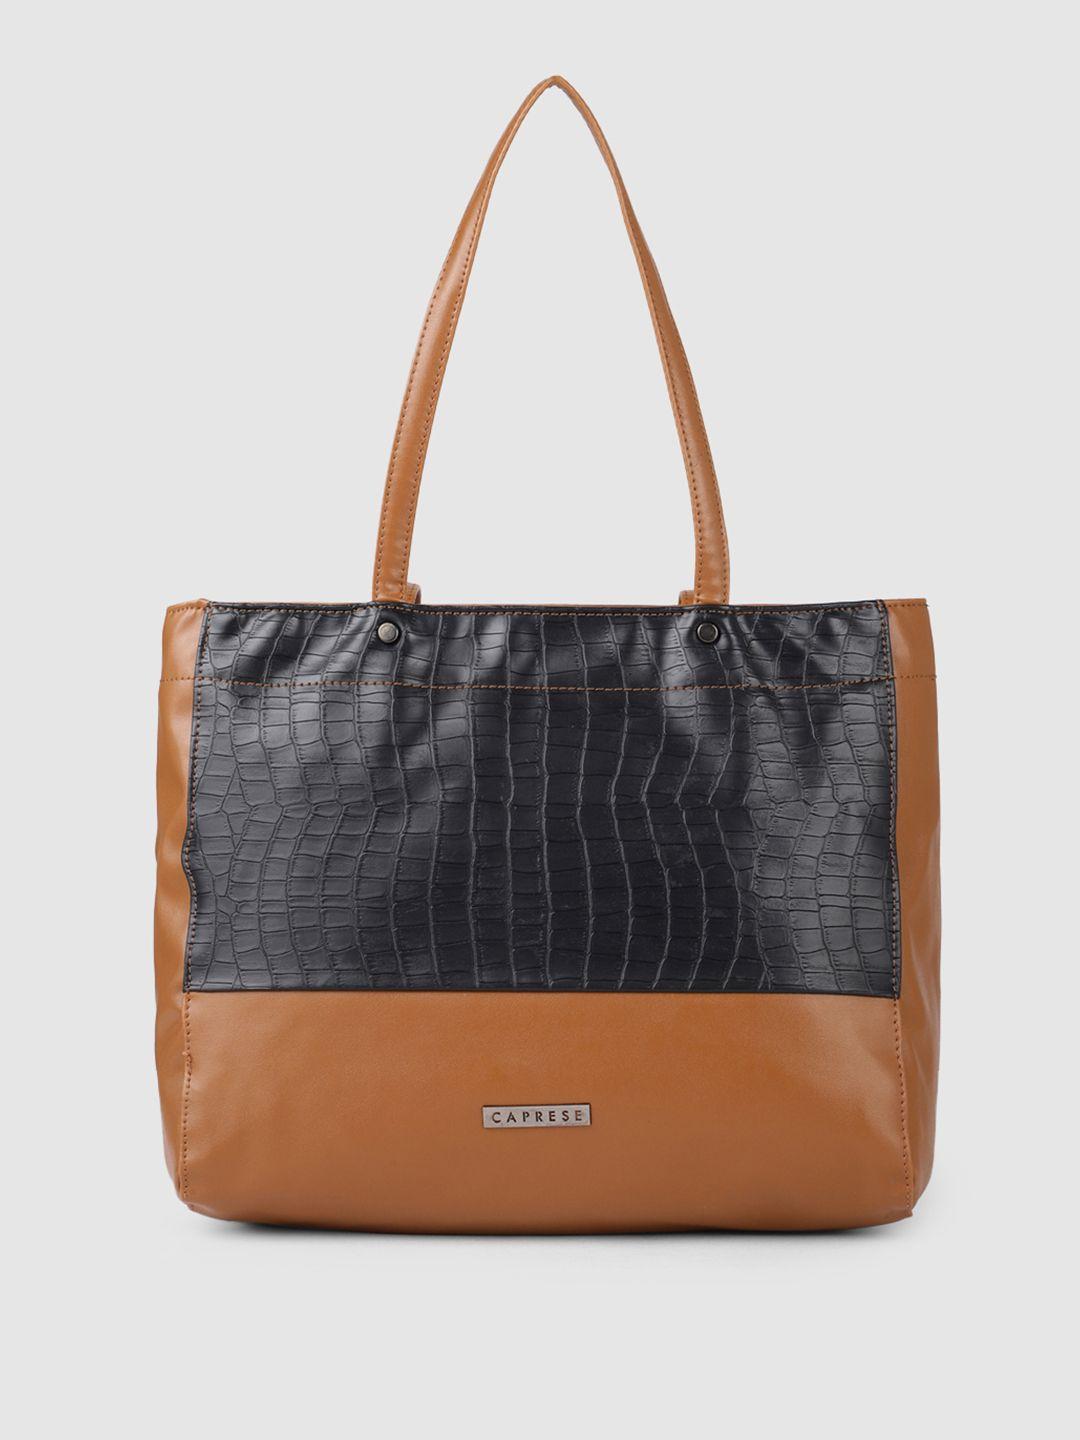 caprese brown solid leather regular structured shoulder bag with animal textured detail